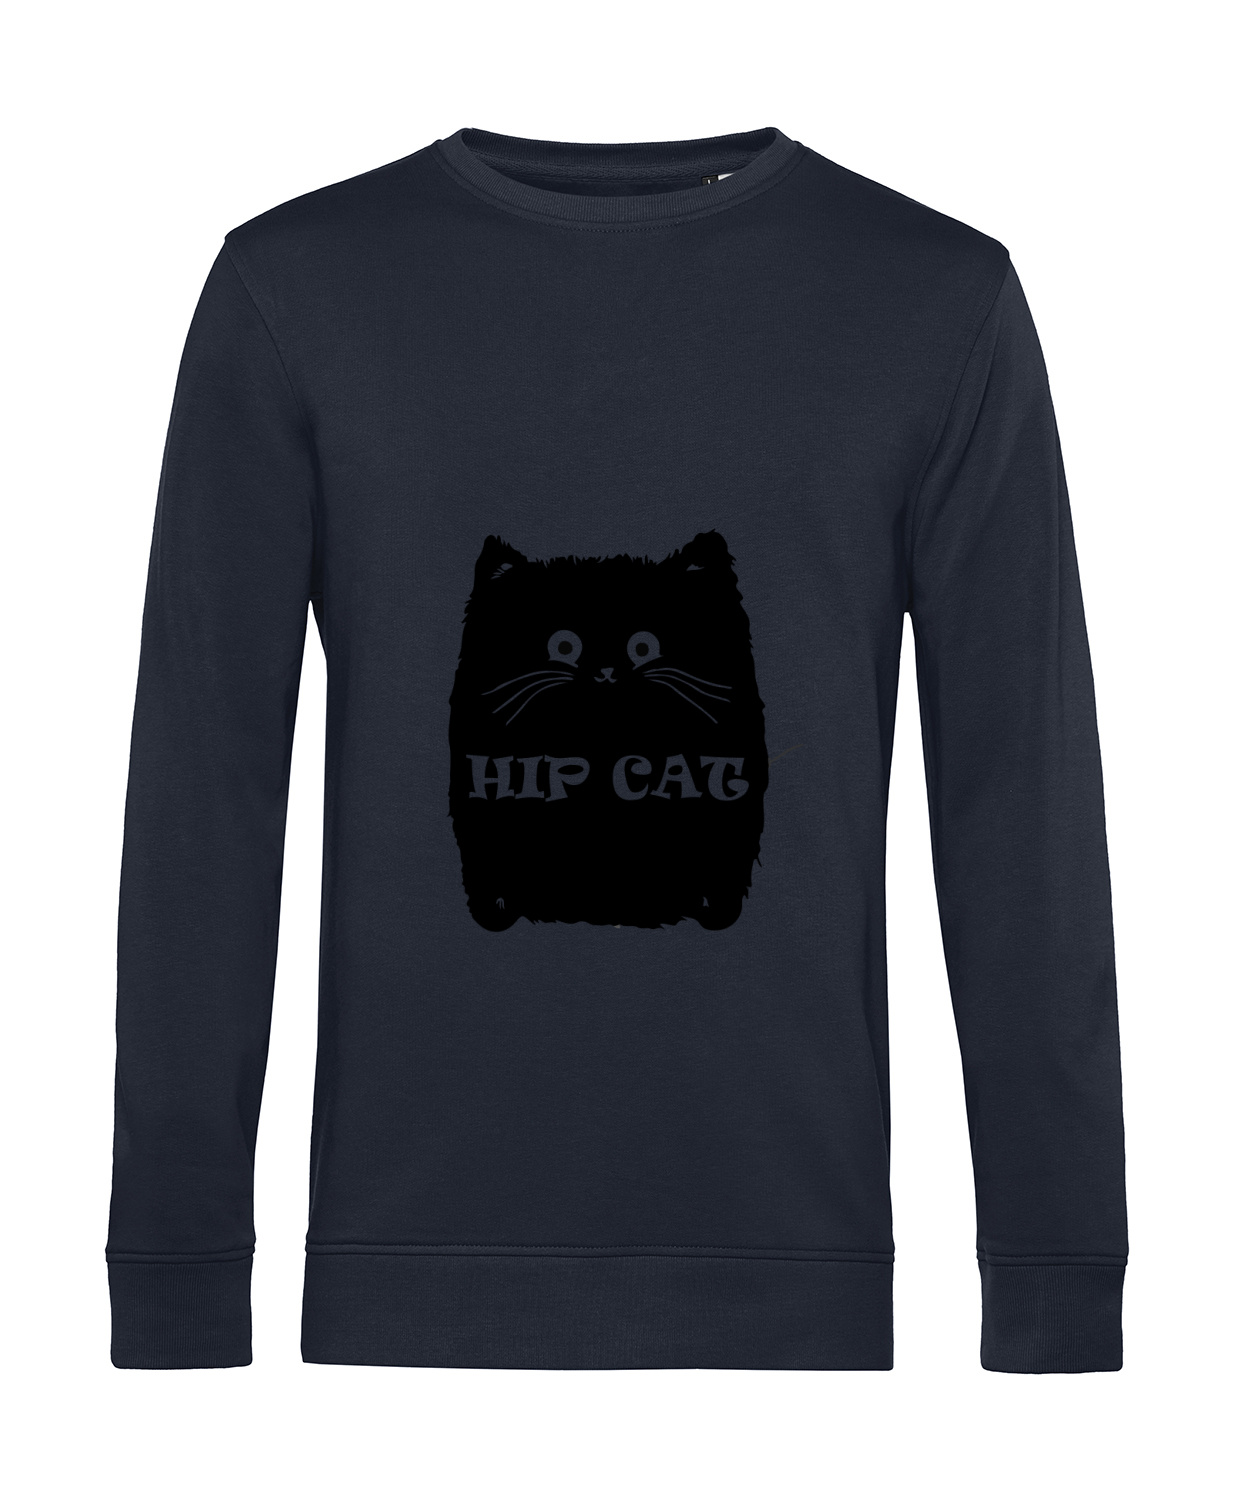 Nachhaltiges Sweatshirt Herren Katzen - Hip Cat